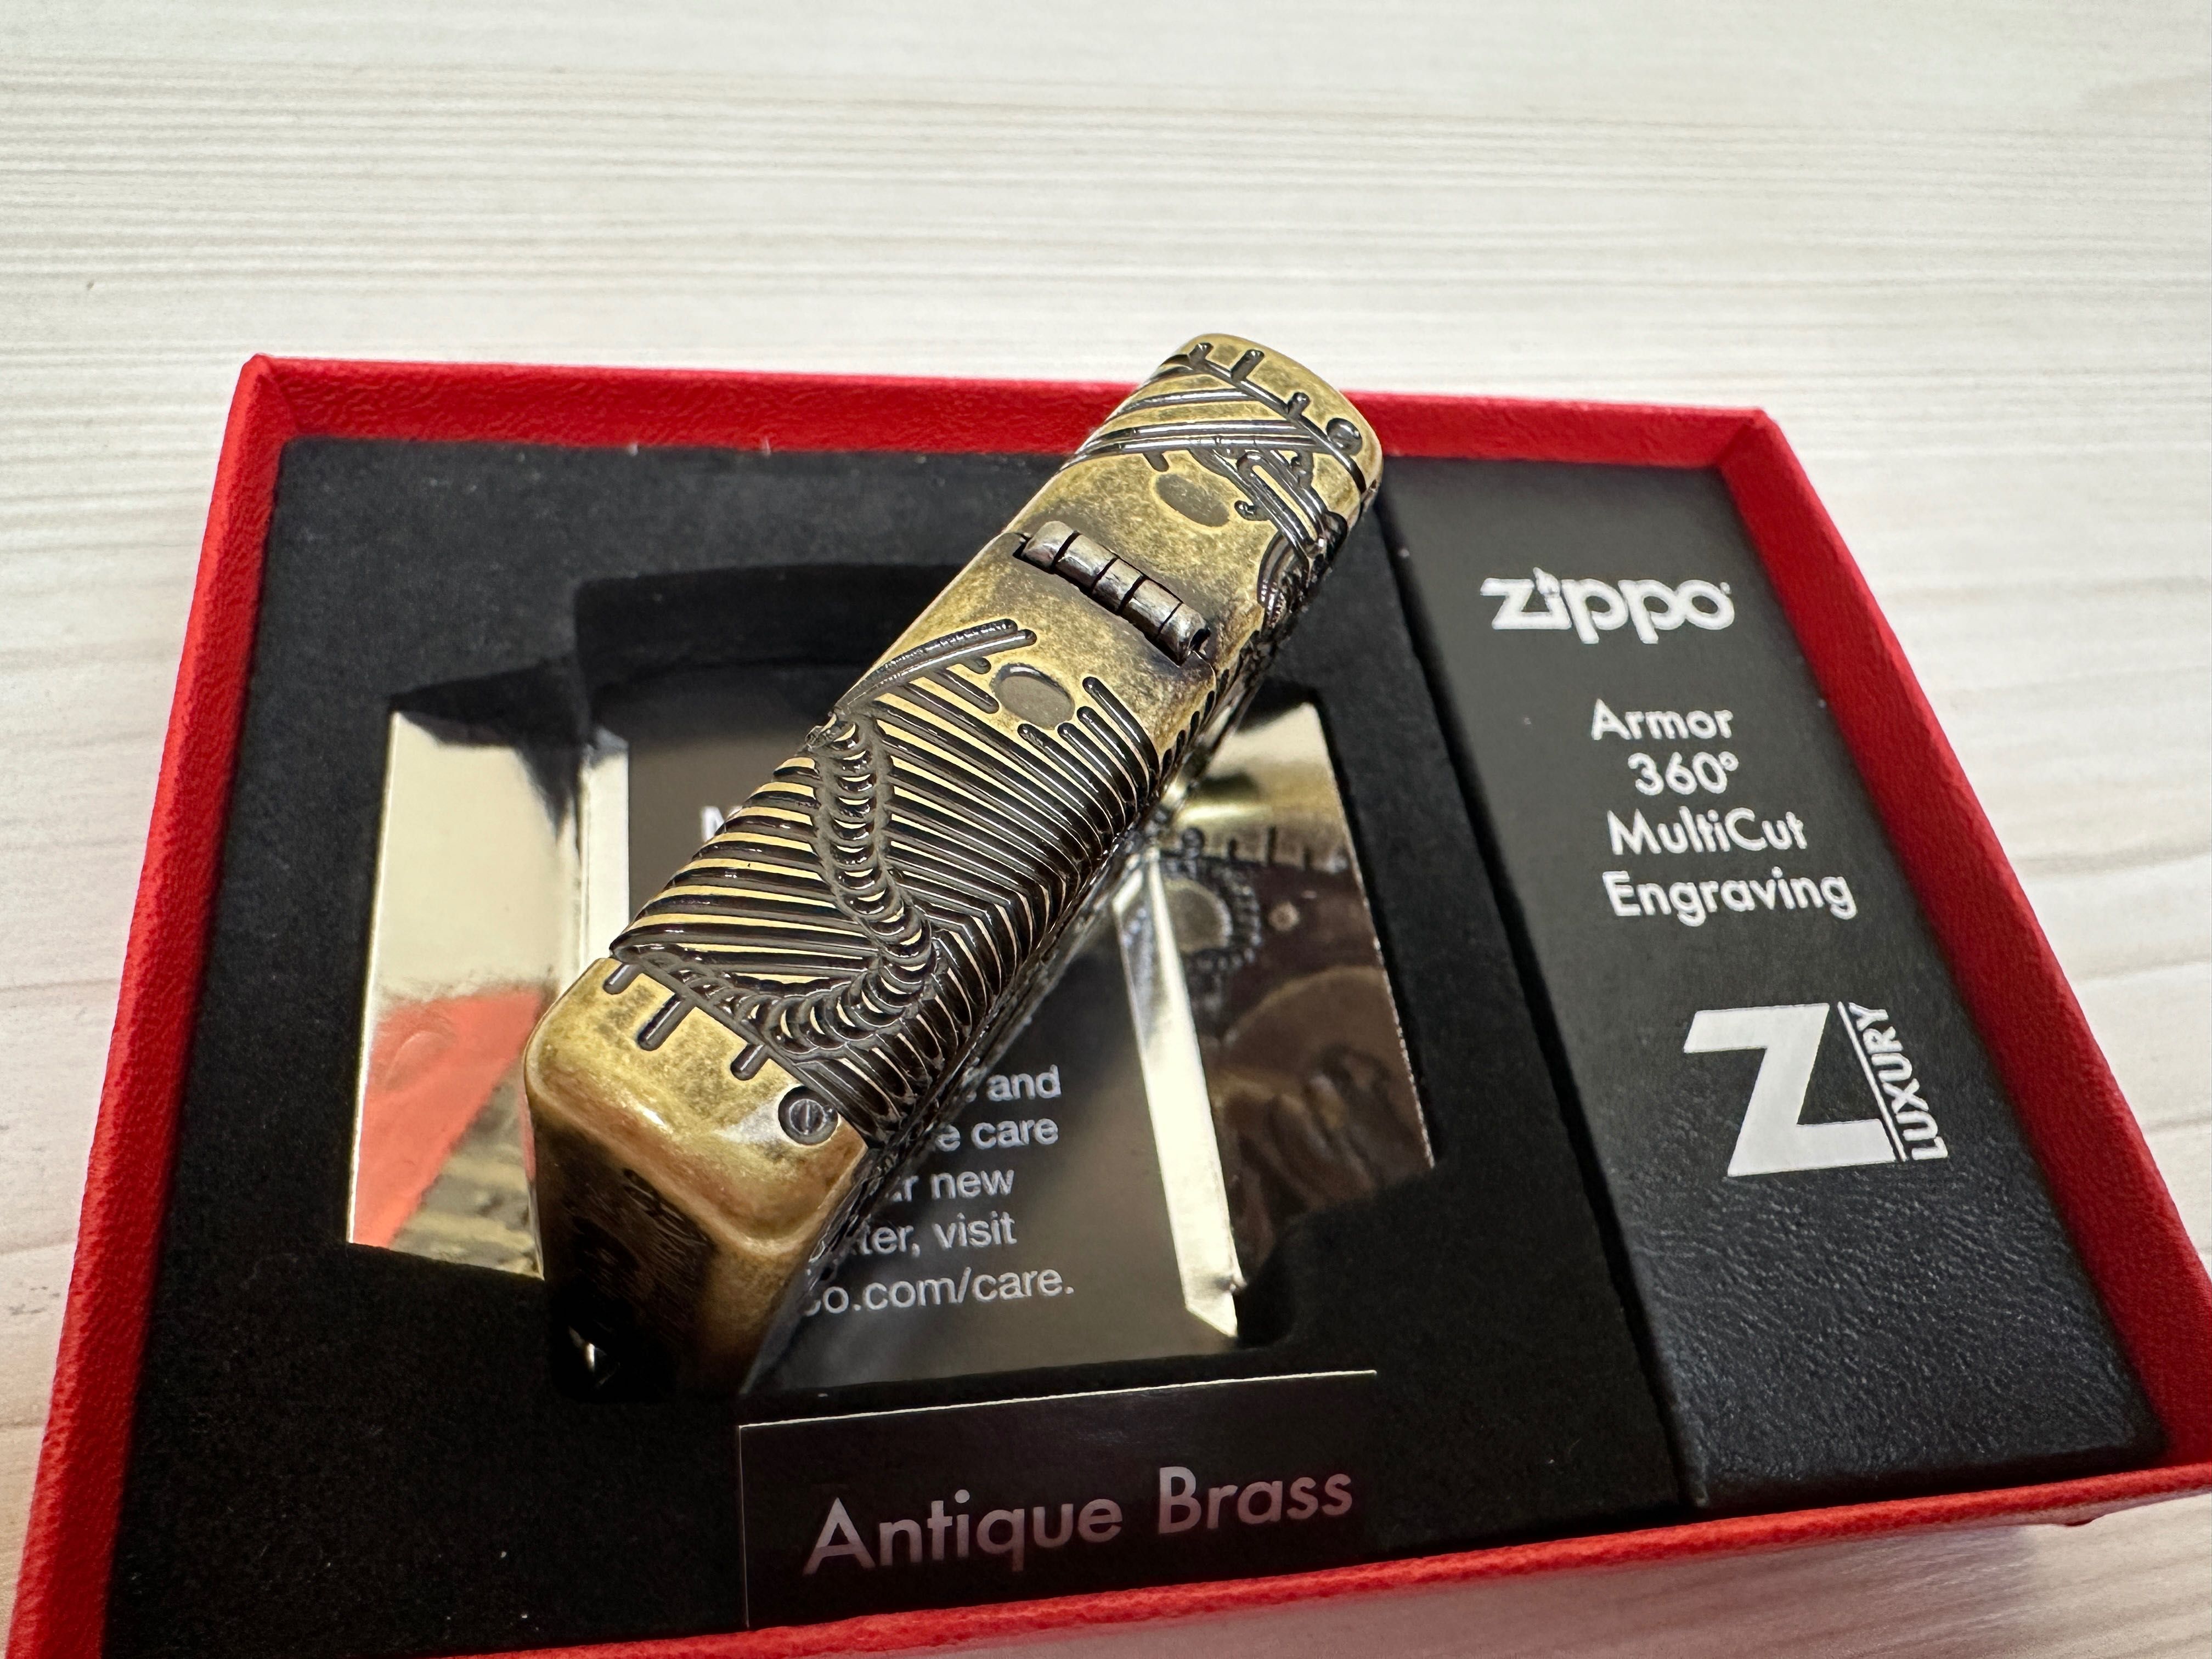 Зажигалка Zippo 29268 Armor Multicut Steampunk Antique Brass